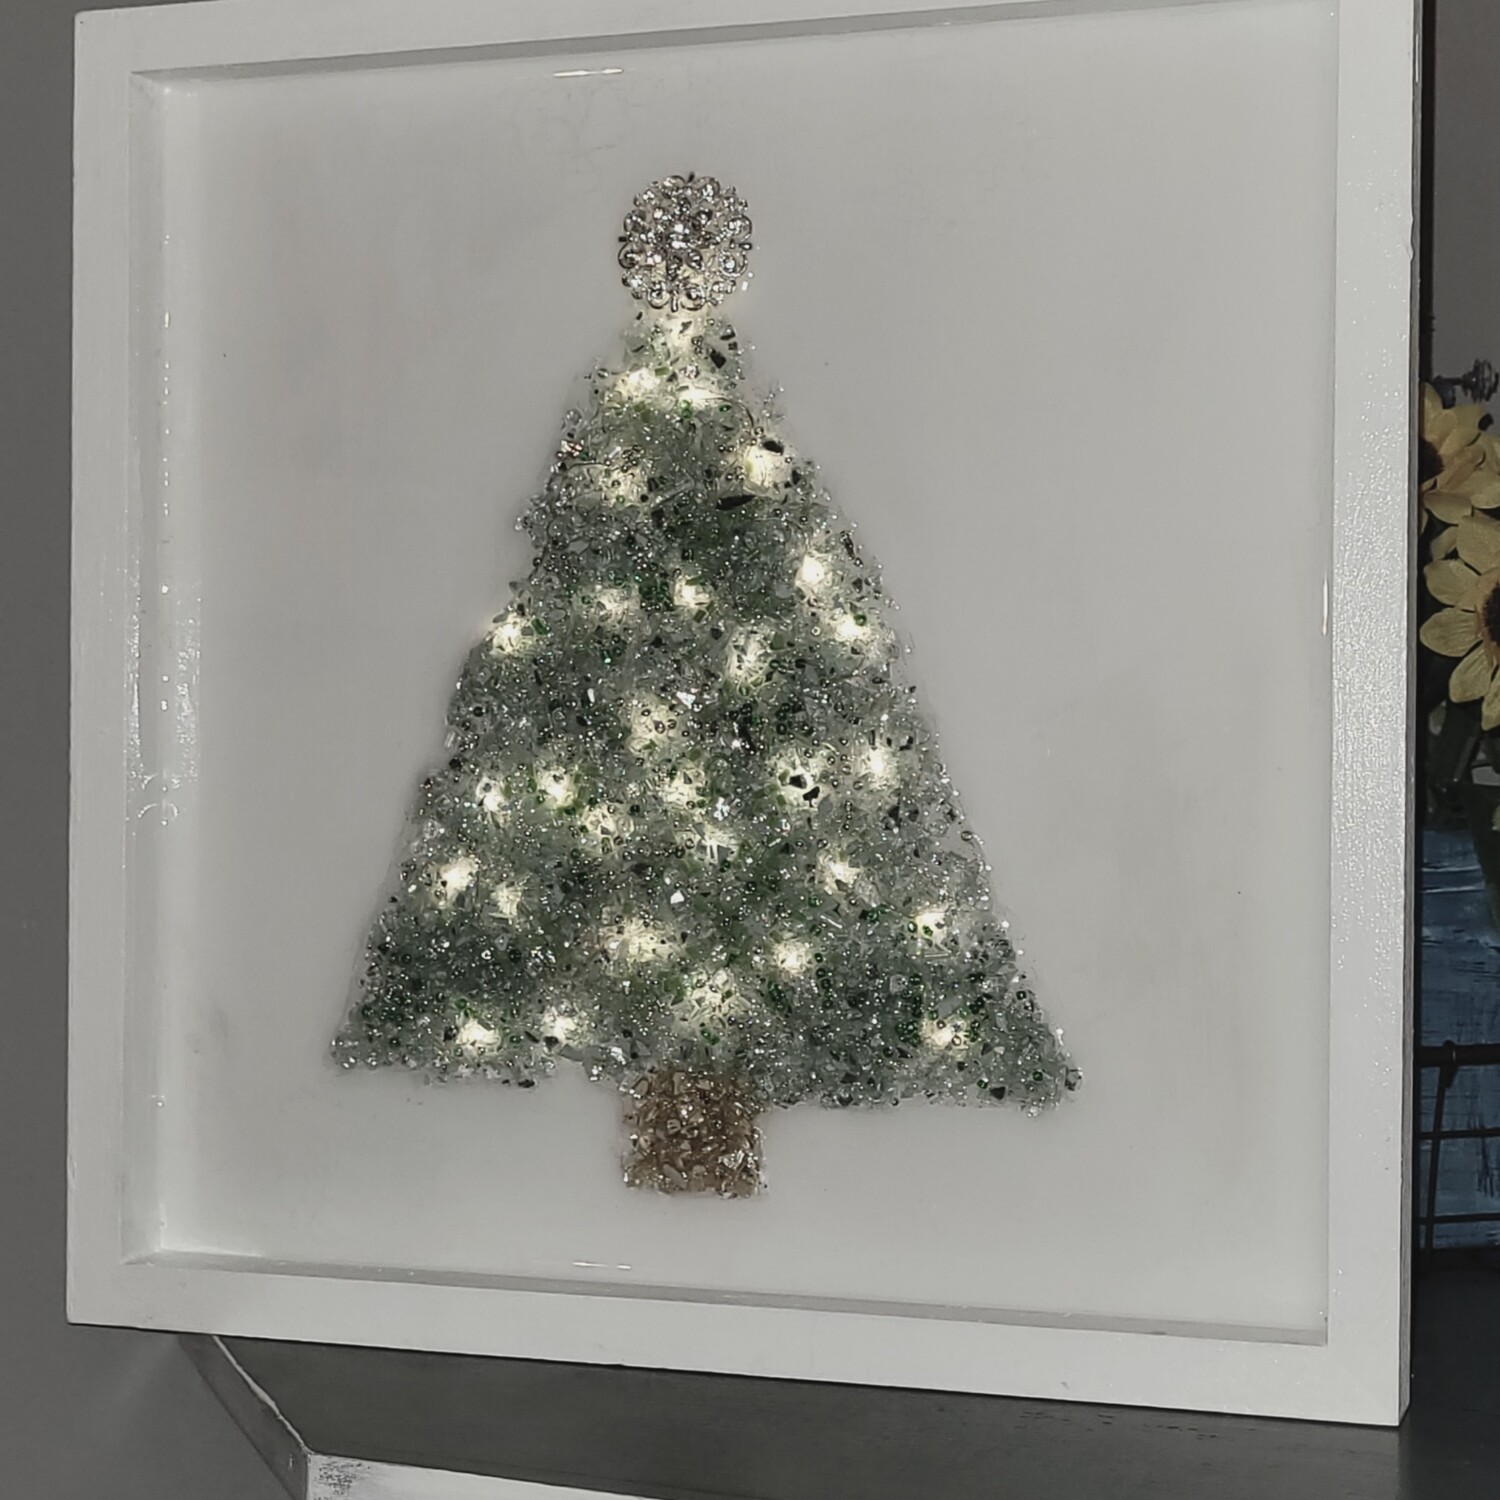 Crushed glass Christmas tree with lights shelf display